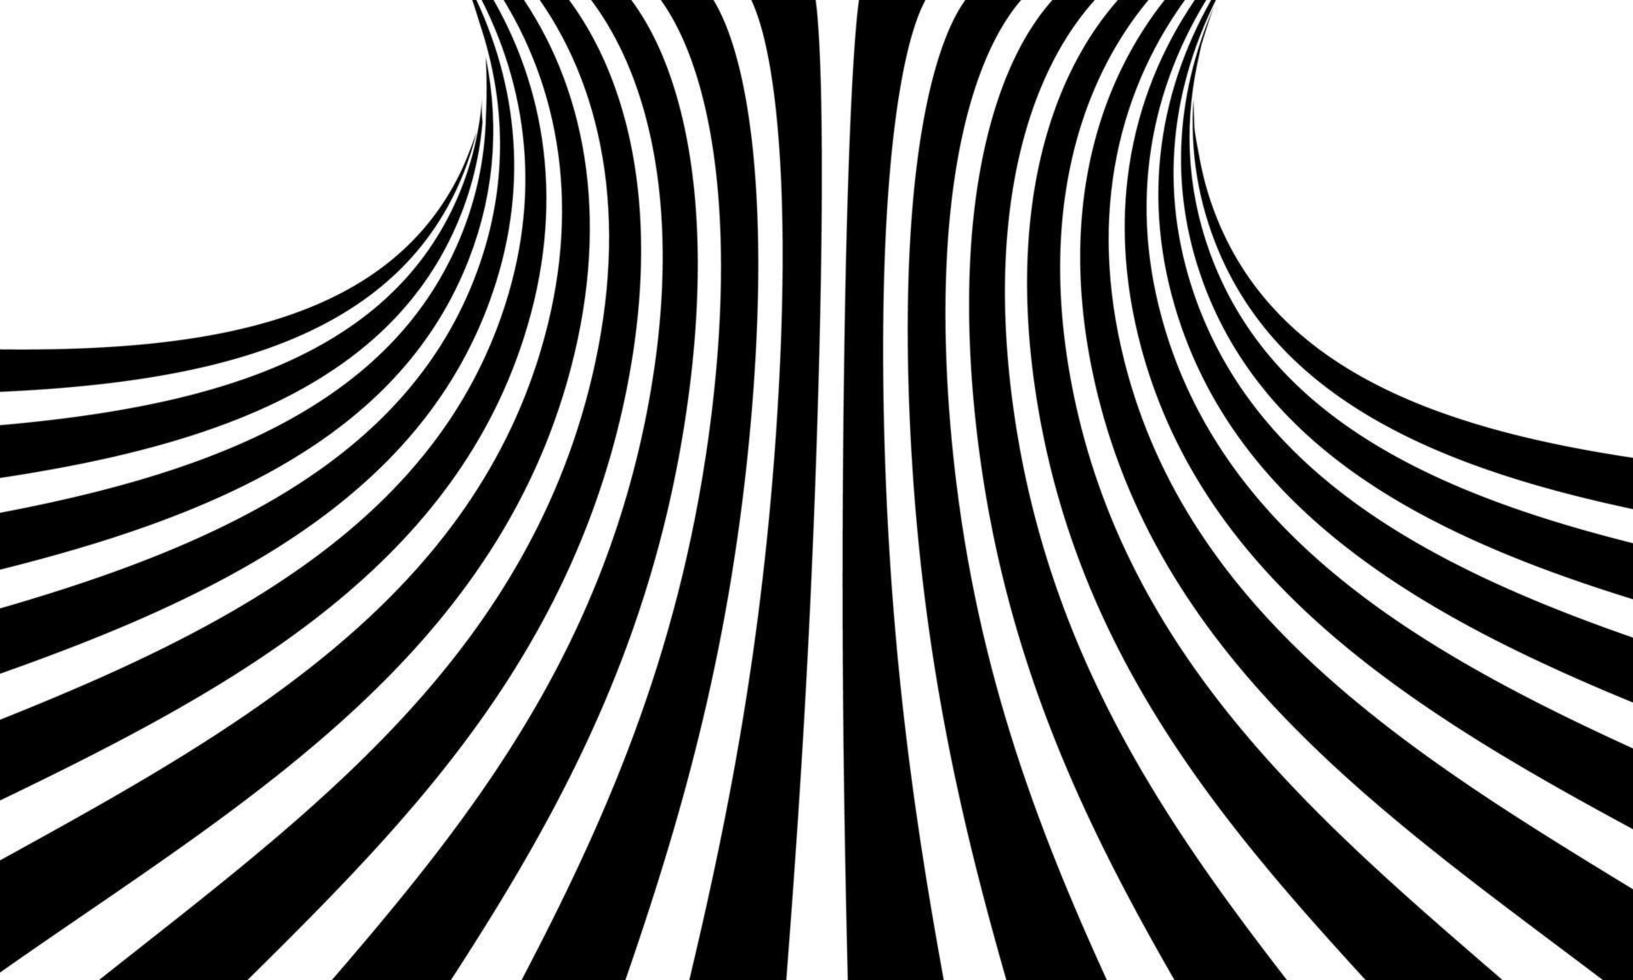 abstrakt bakgrundsillustration svartvit designmönster med optisk illusion abstrakt geometrisk vektor